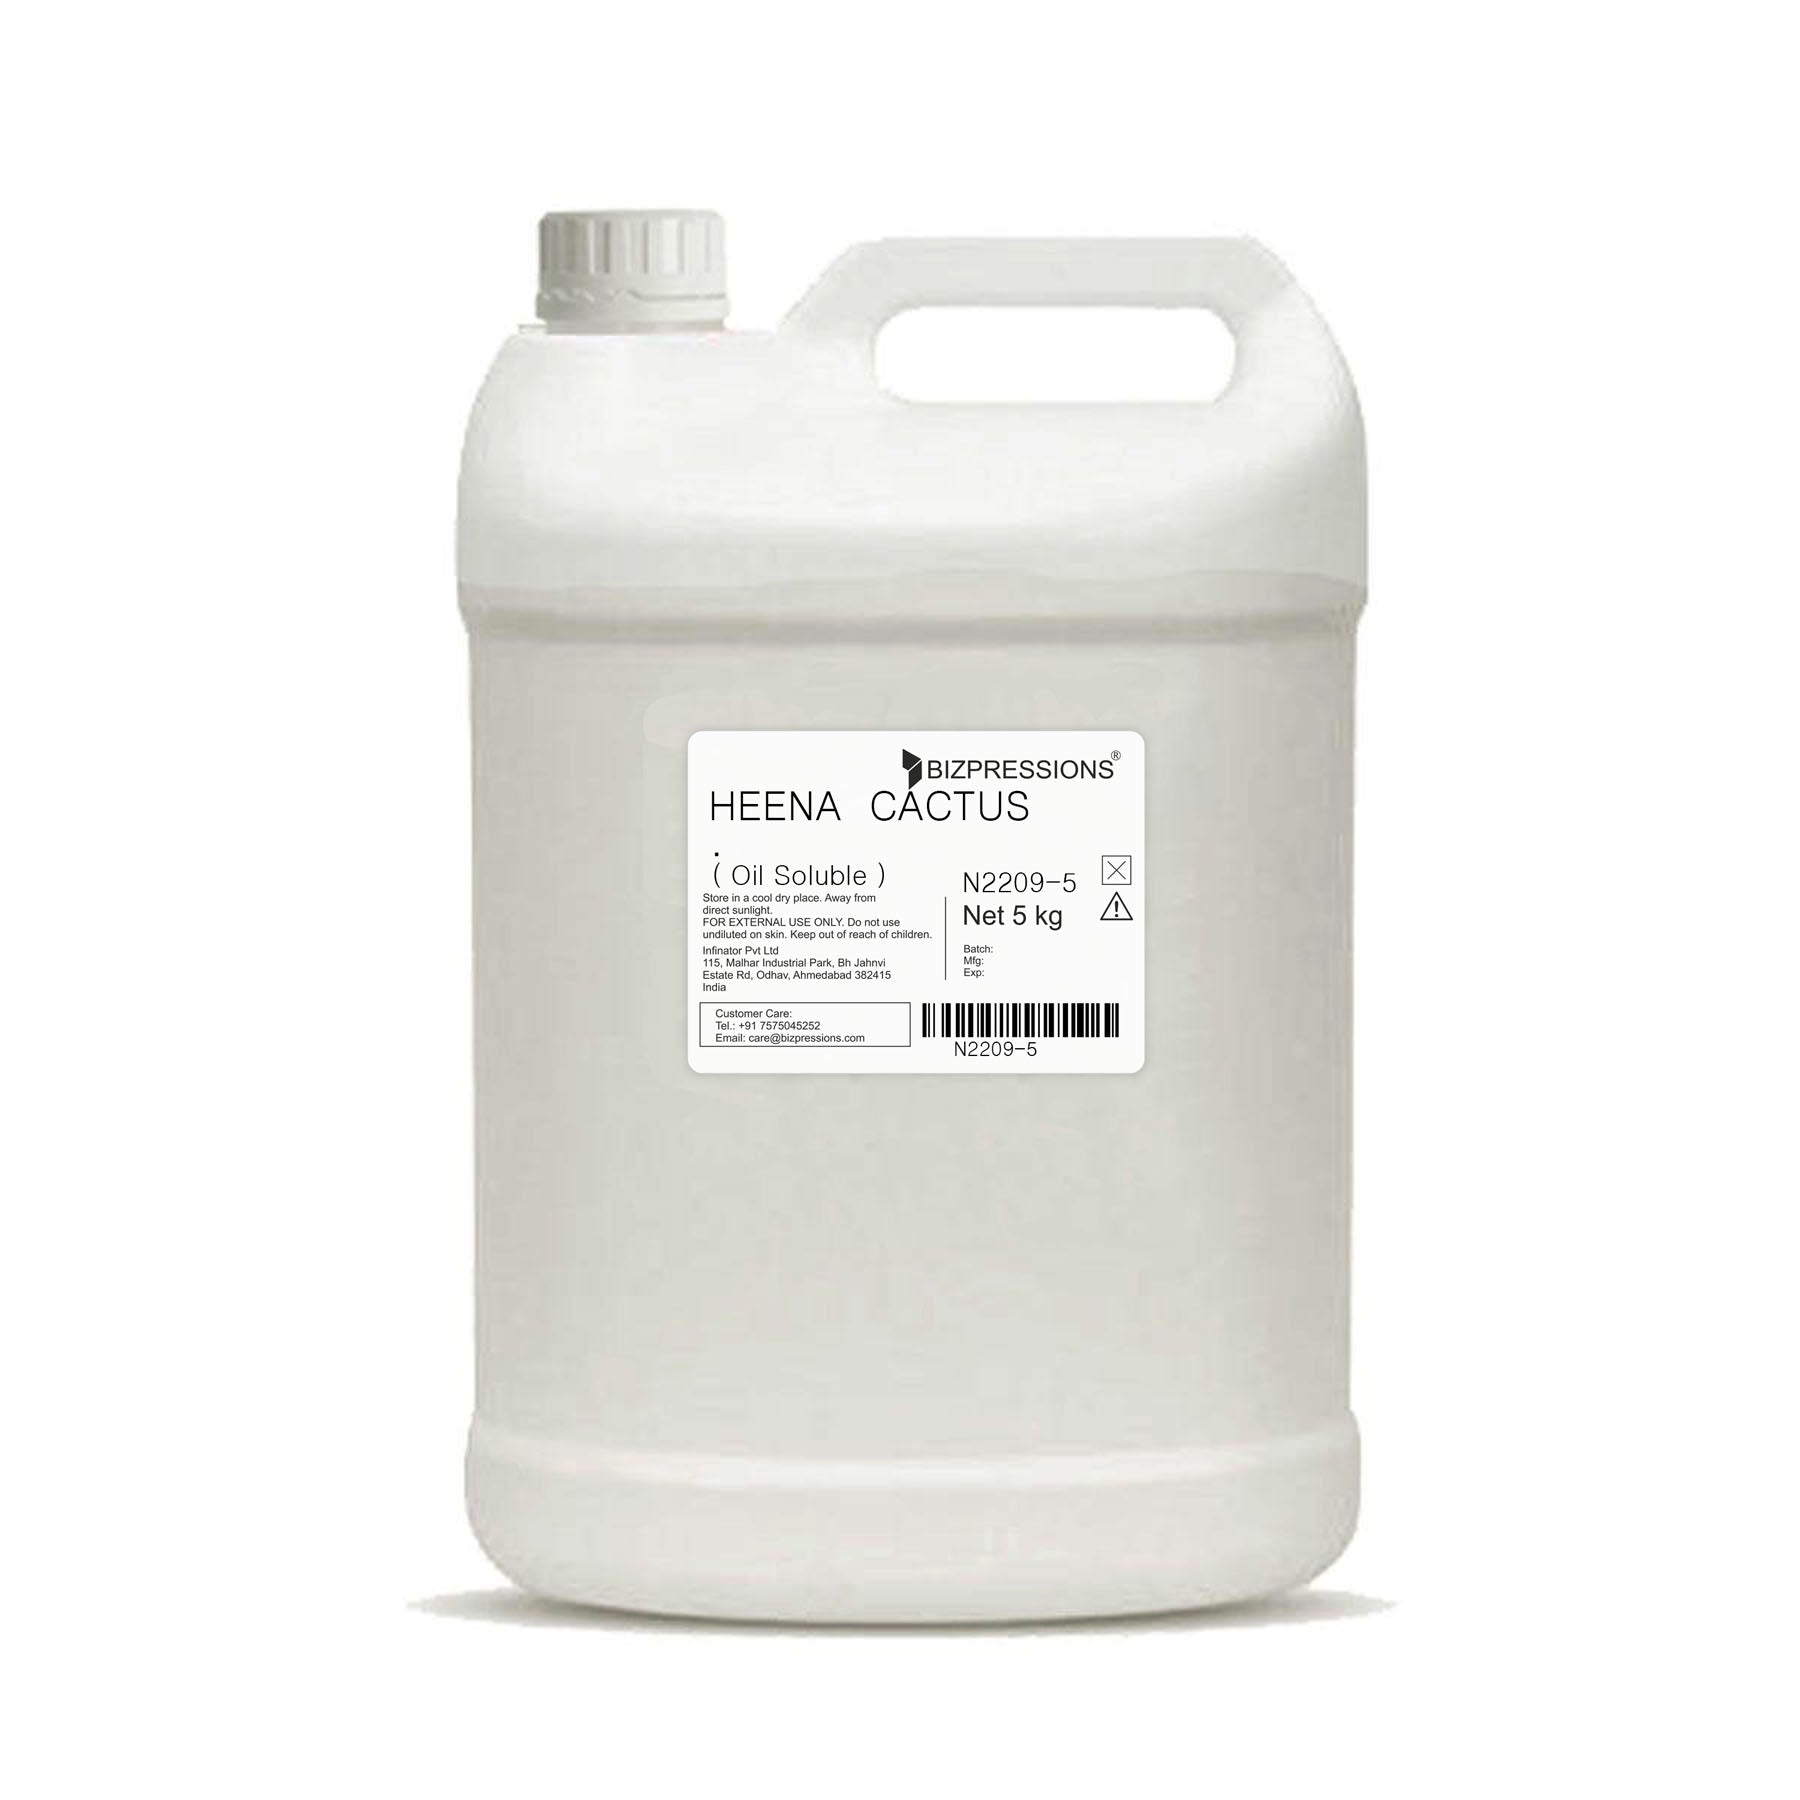 HEENA CACTUS - Fragrance ( Oil Soluble ) - 5 kg